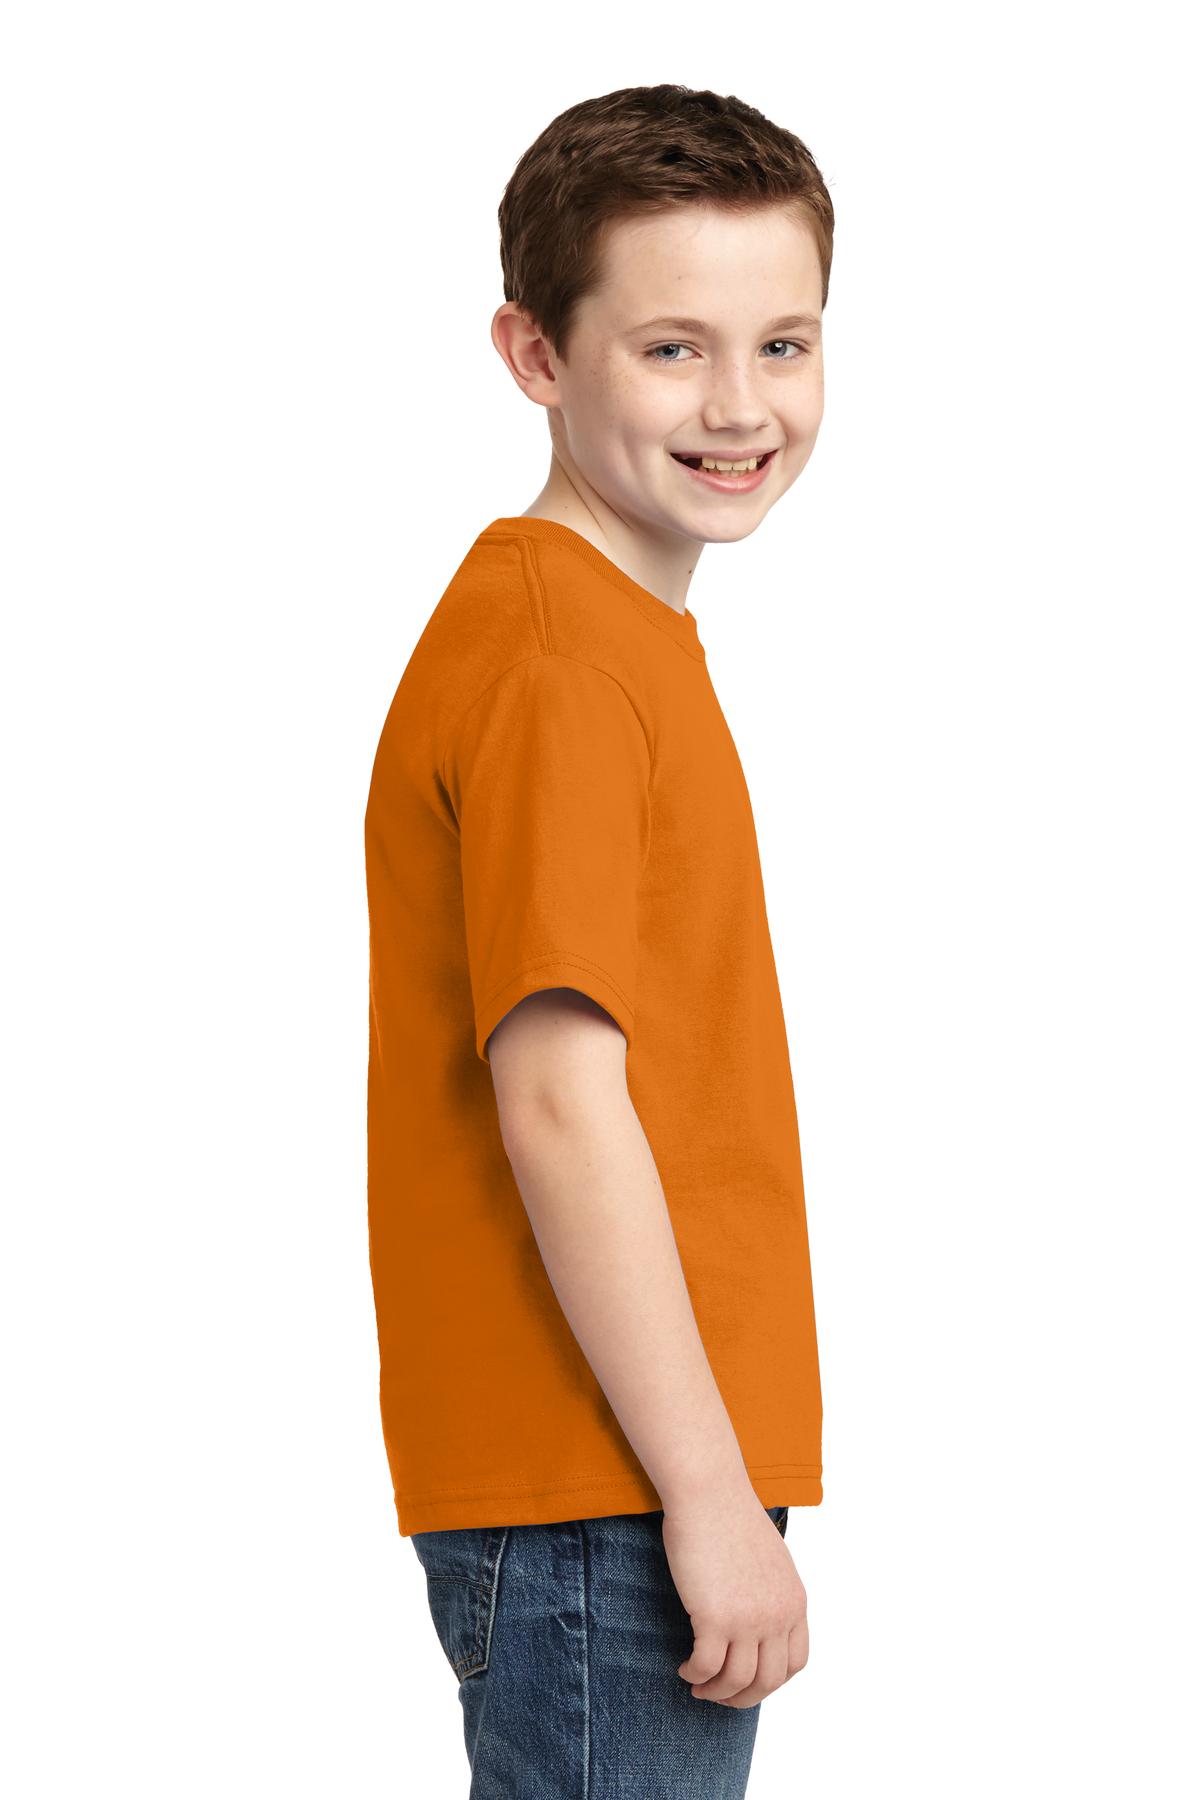 JERZEES® - Youth Dri-Power® 50/50 Cotton/Poly T-Shirt. 29B [Tennessee Orange] - DFW Impression